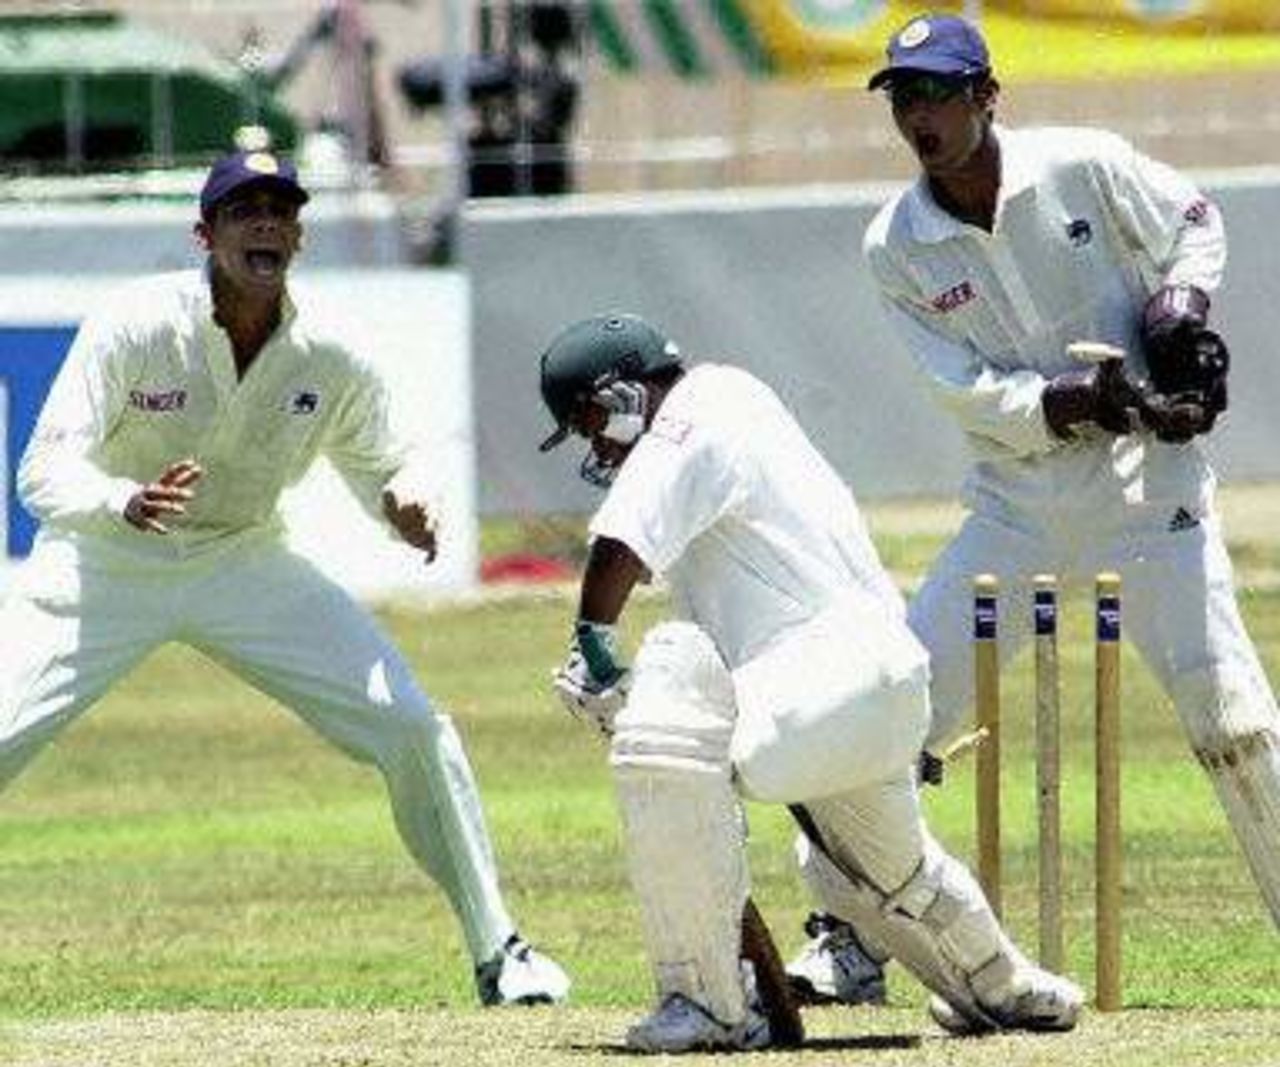 Murali gets the better of Bangladeshi captain Naimur Rahman as Vandort and Sangakkara watch, Asian Test Championship 2001-02, 2nd Match, Sri Lanka v Bangladesh, Sinhalese Sports Club Ground, Colombo.